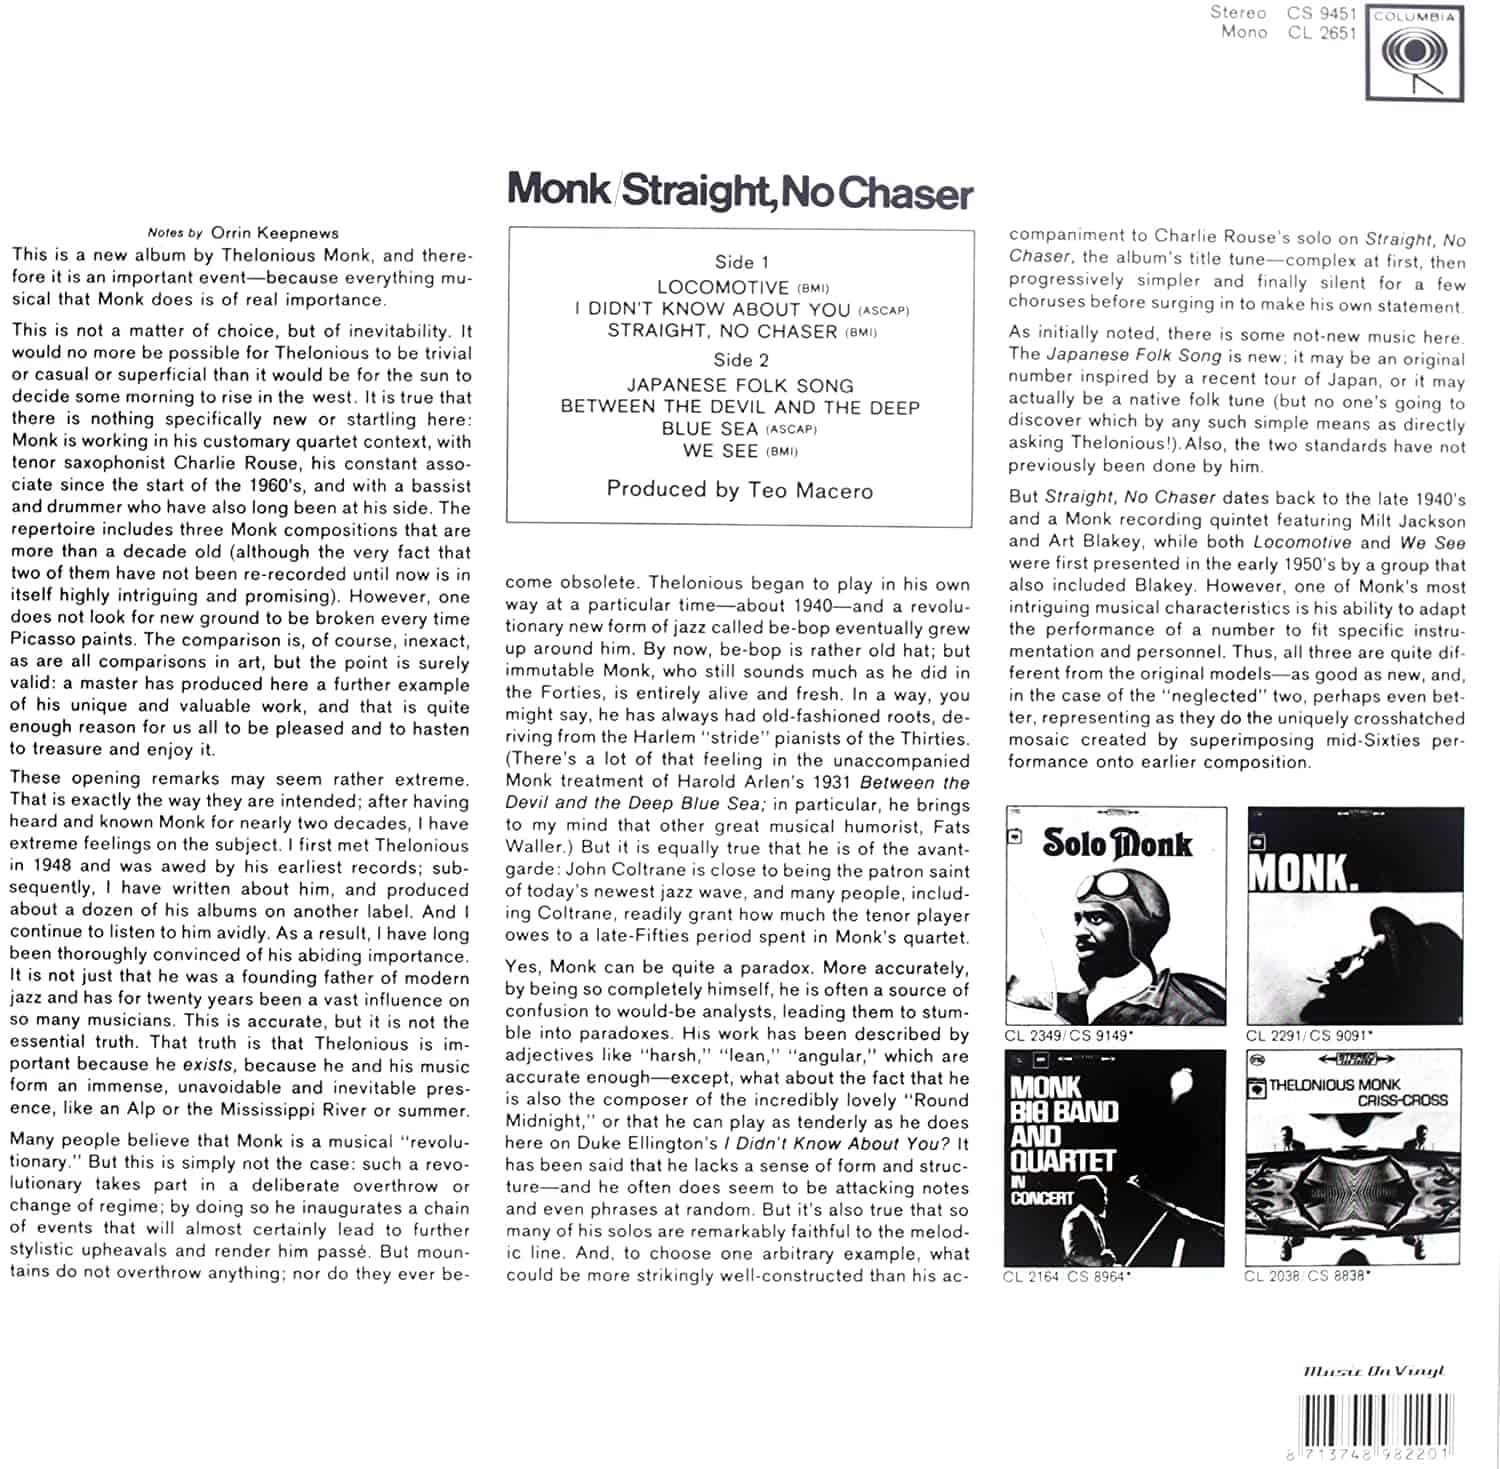 Thelonious-Monk-Straight-No-Chaser-vinyl-LP-record-album-back